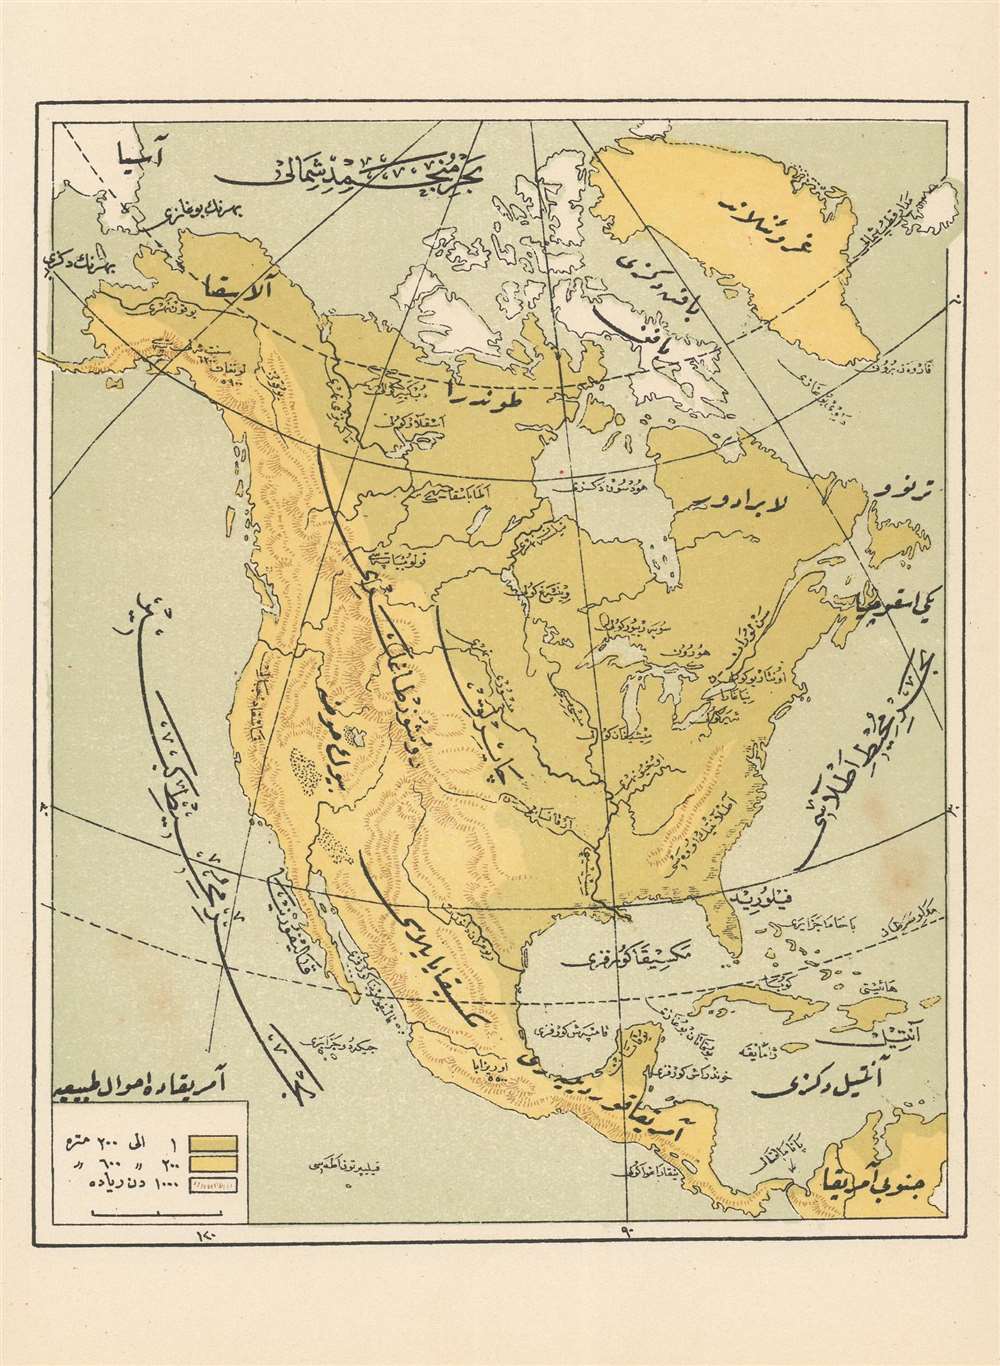 1910 Turkish Atlas Map of North America